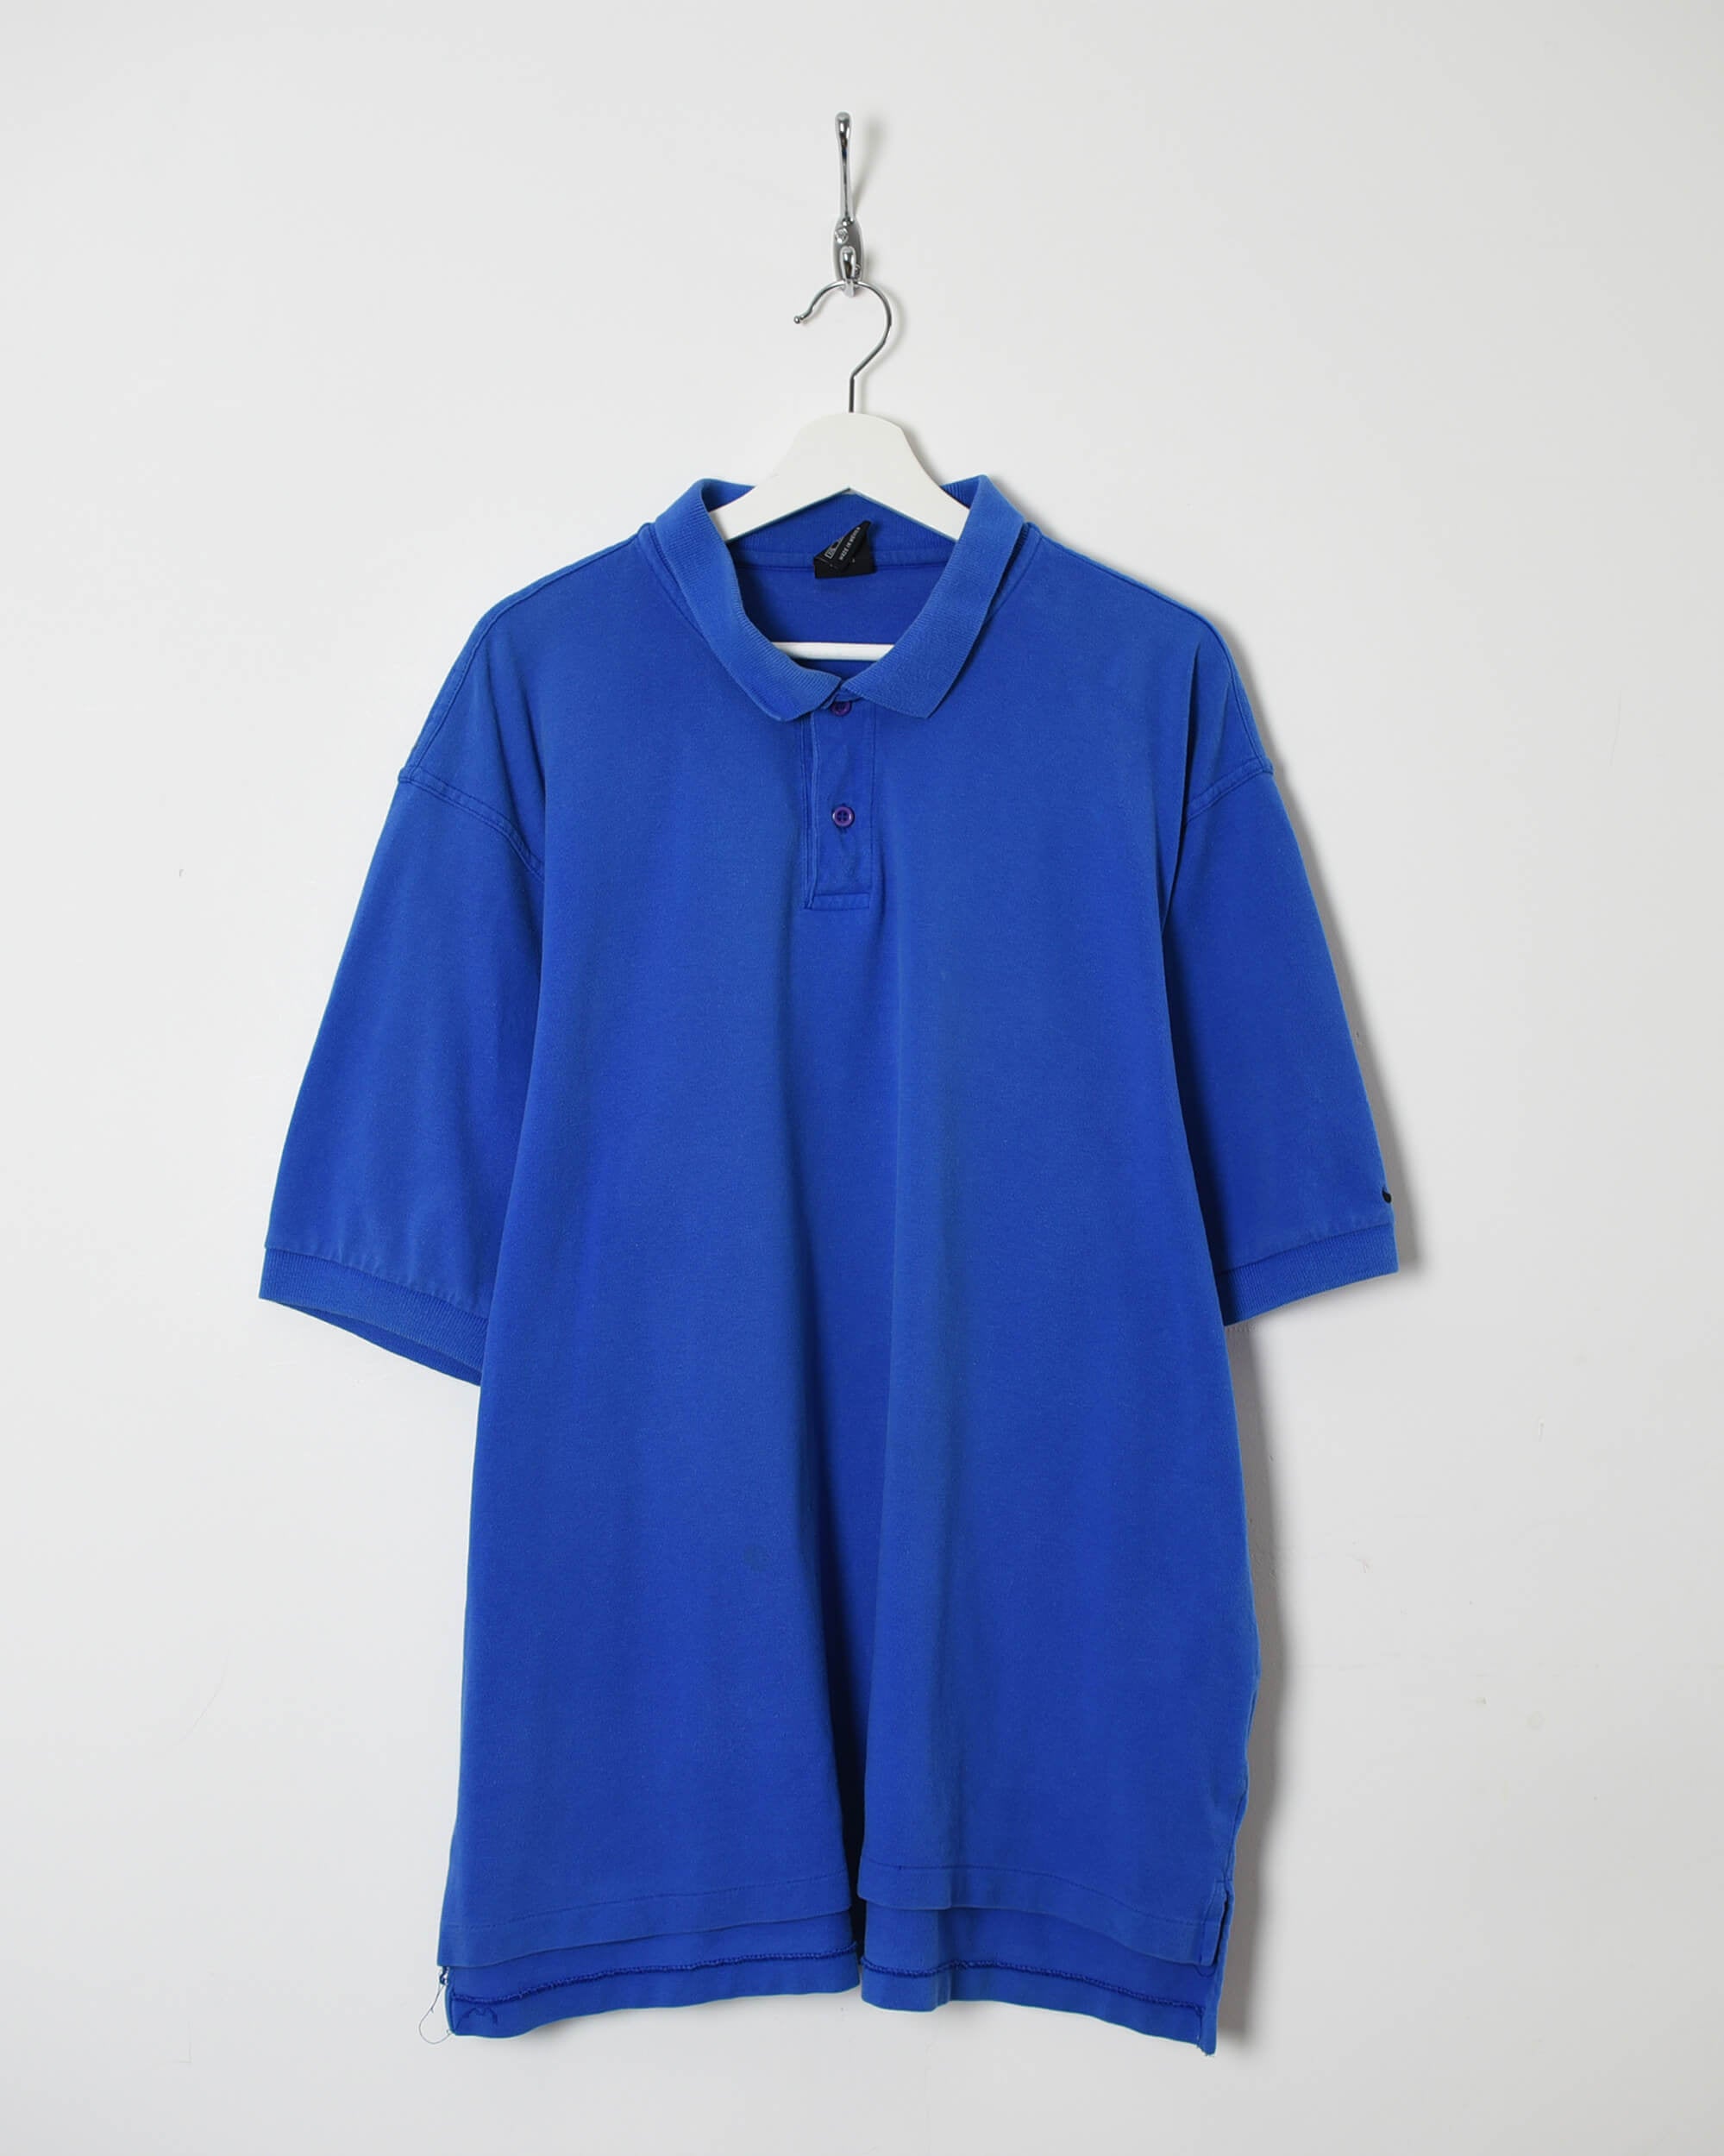 Nike Polo Shirt - XX-Large - Domno Vintage 90s, 80s, 00s Retro and Vintage Clothing 